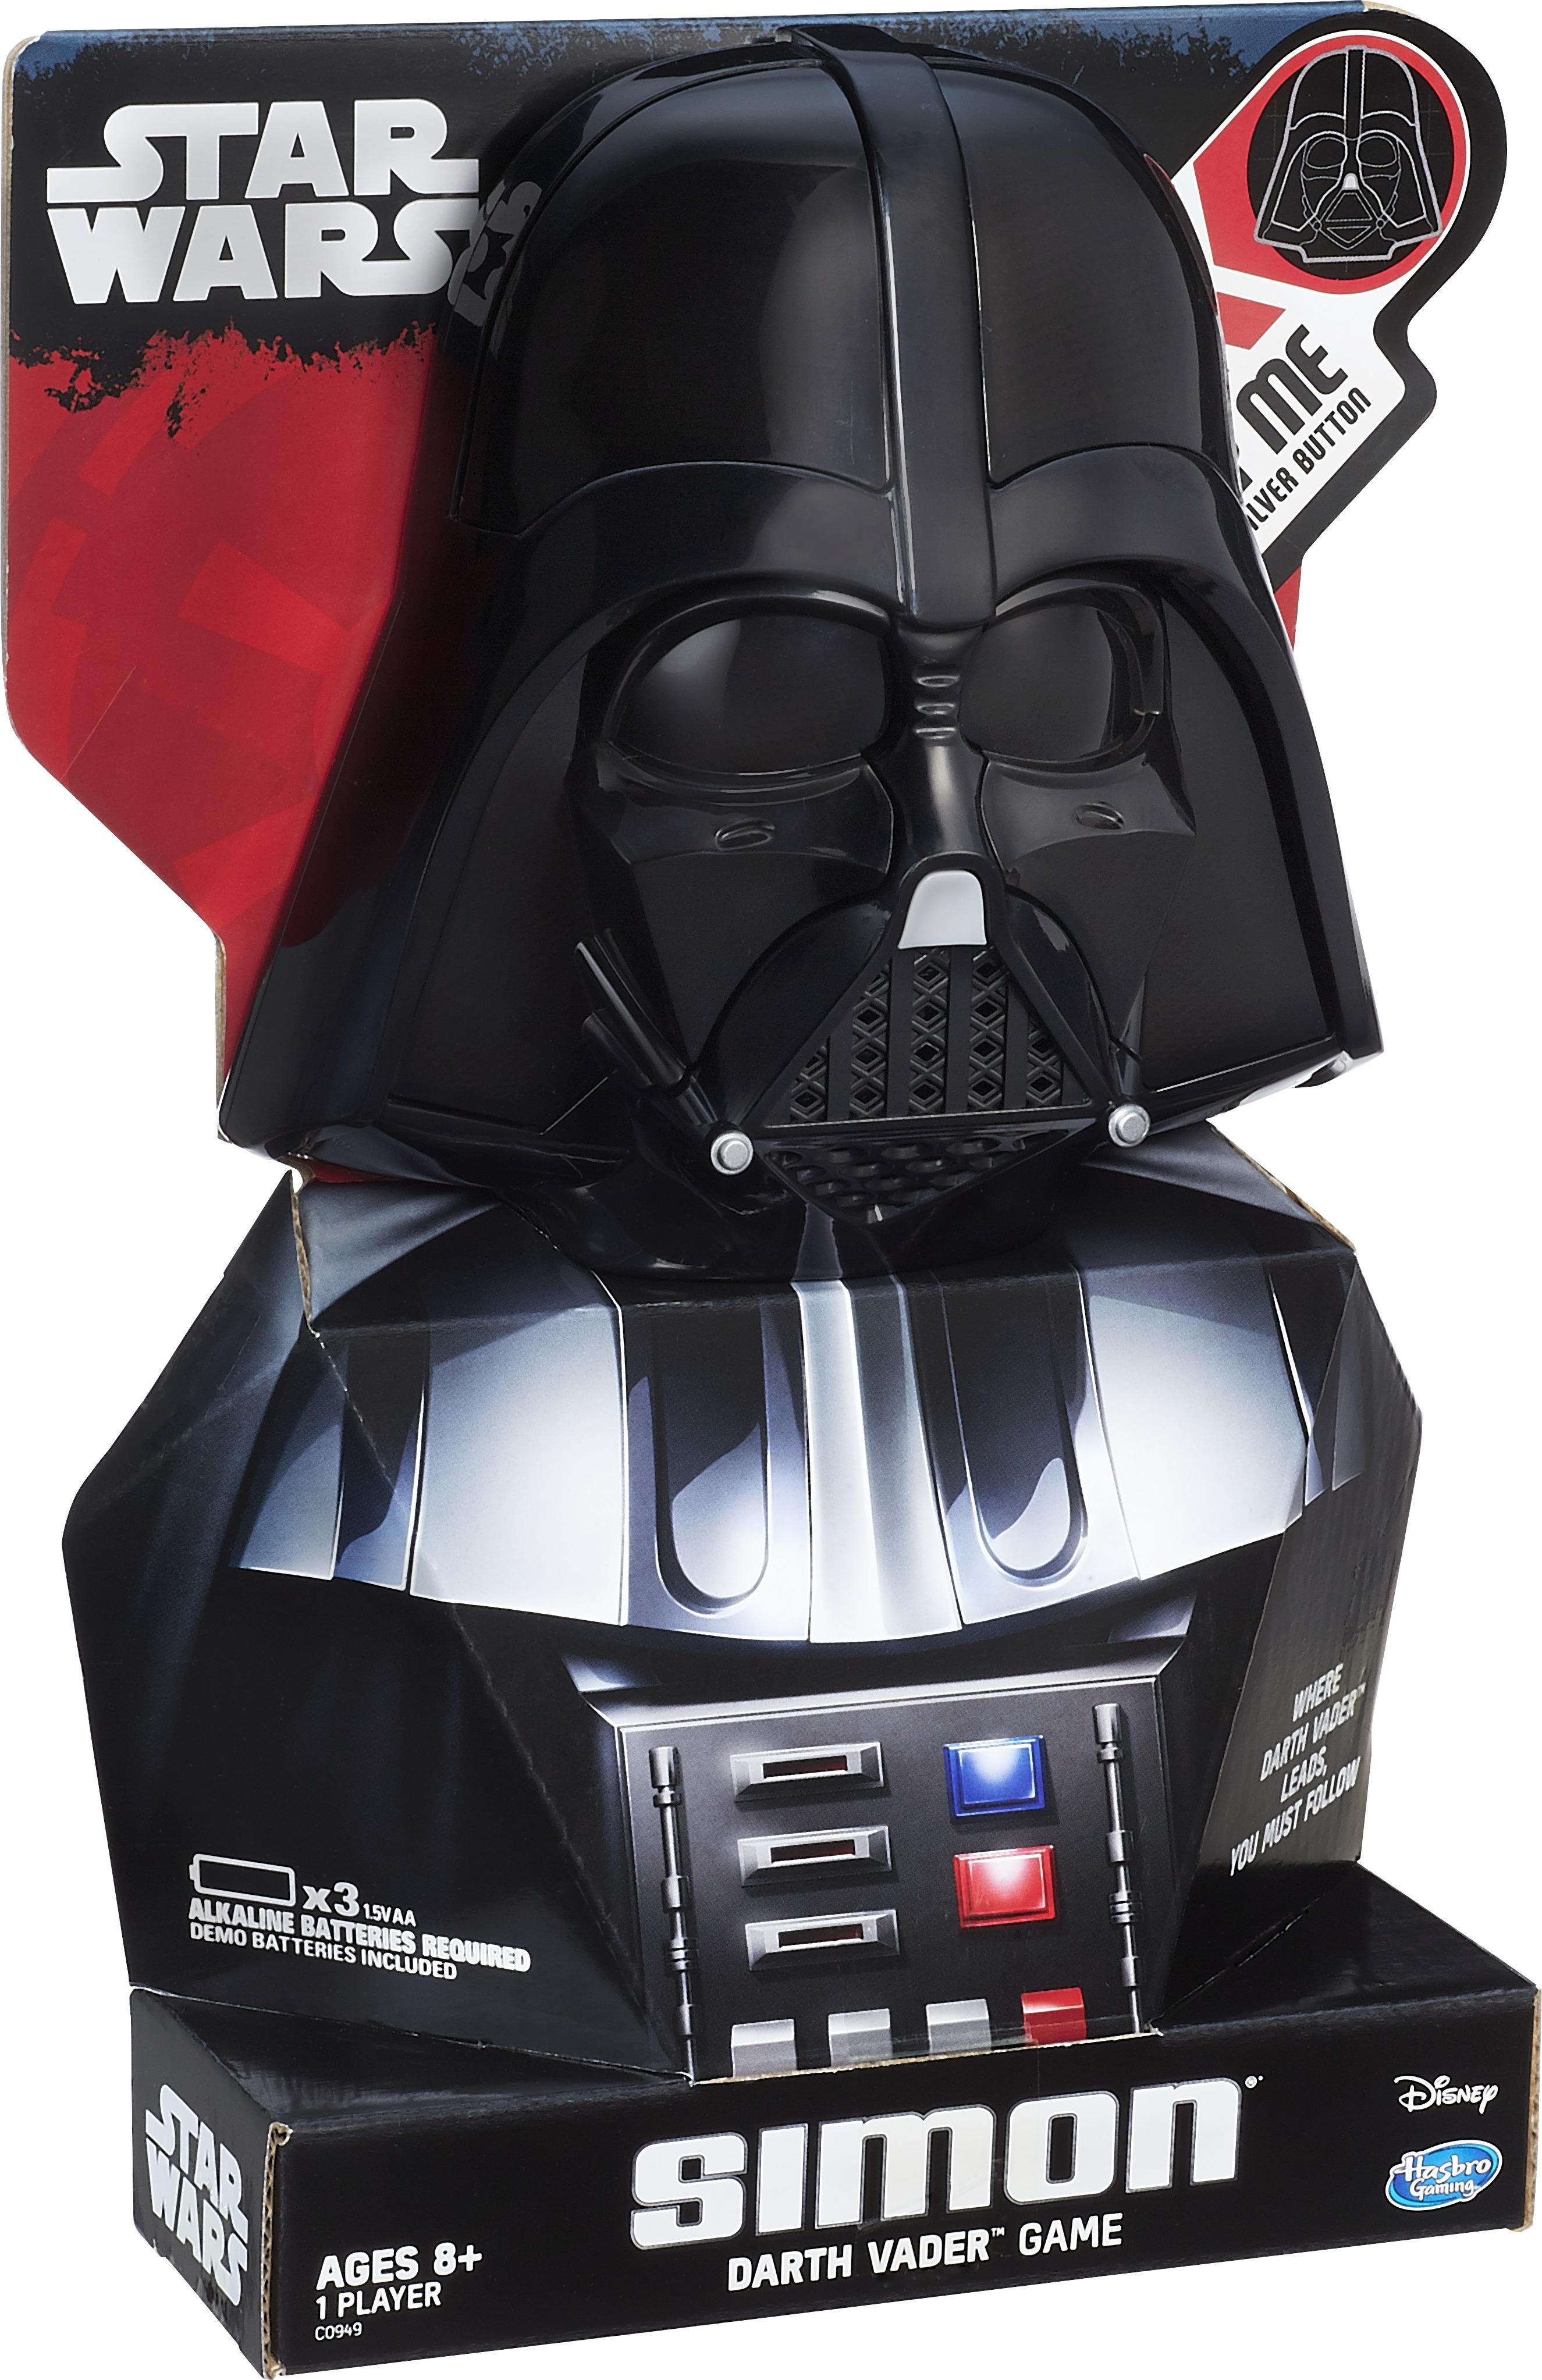 Hasbro Star Wars Simon Darth Vader Game Edition C0949 for sale online 